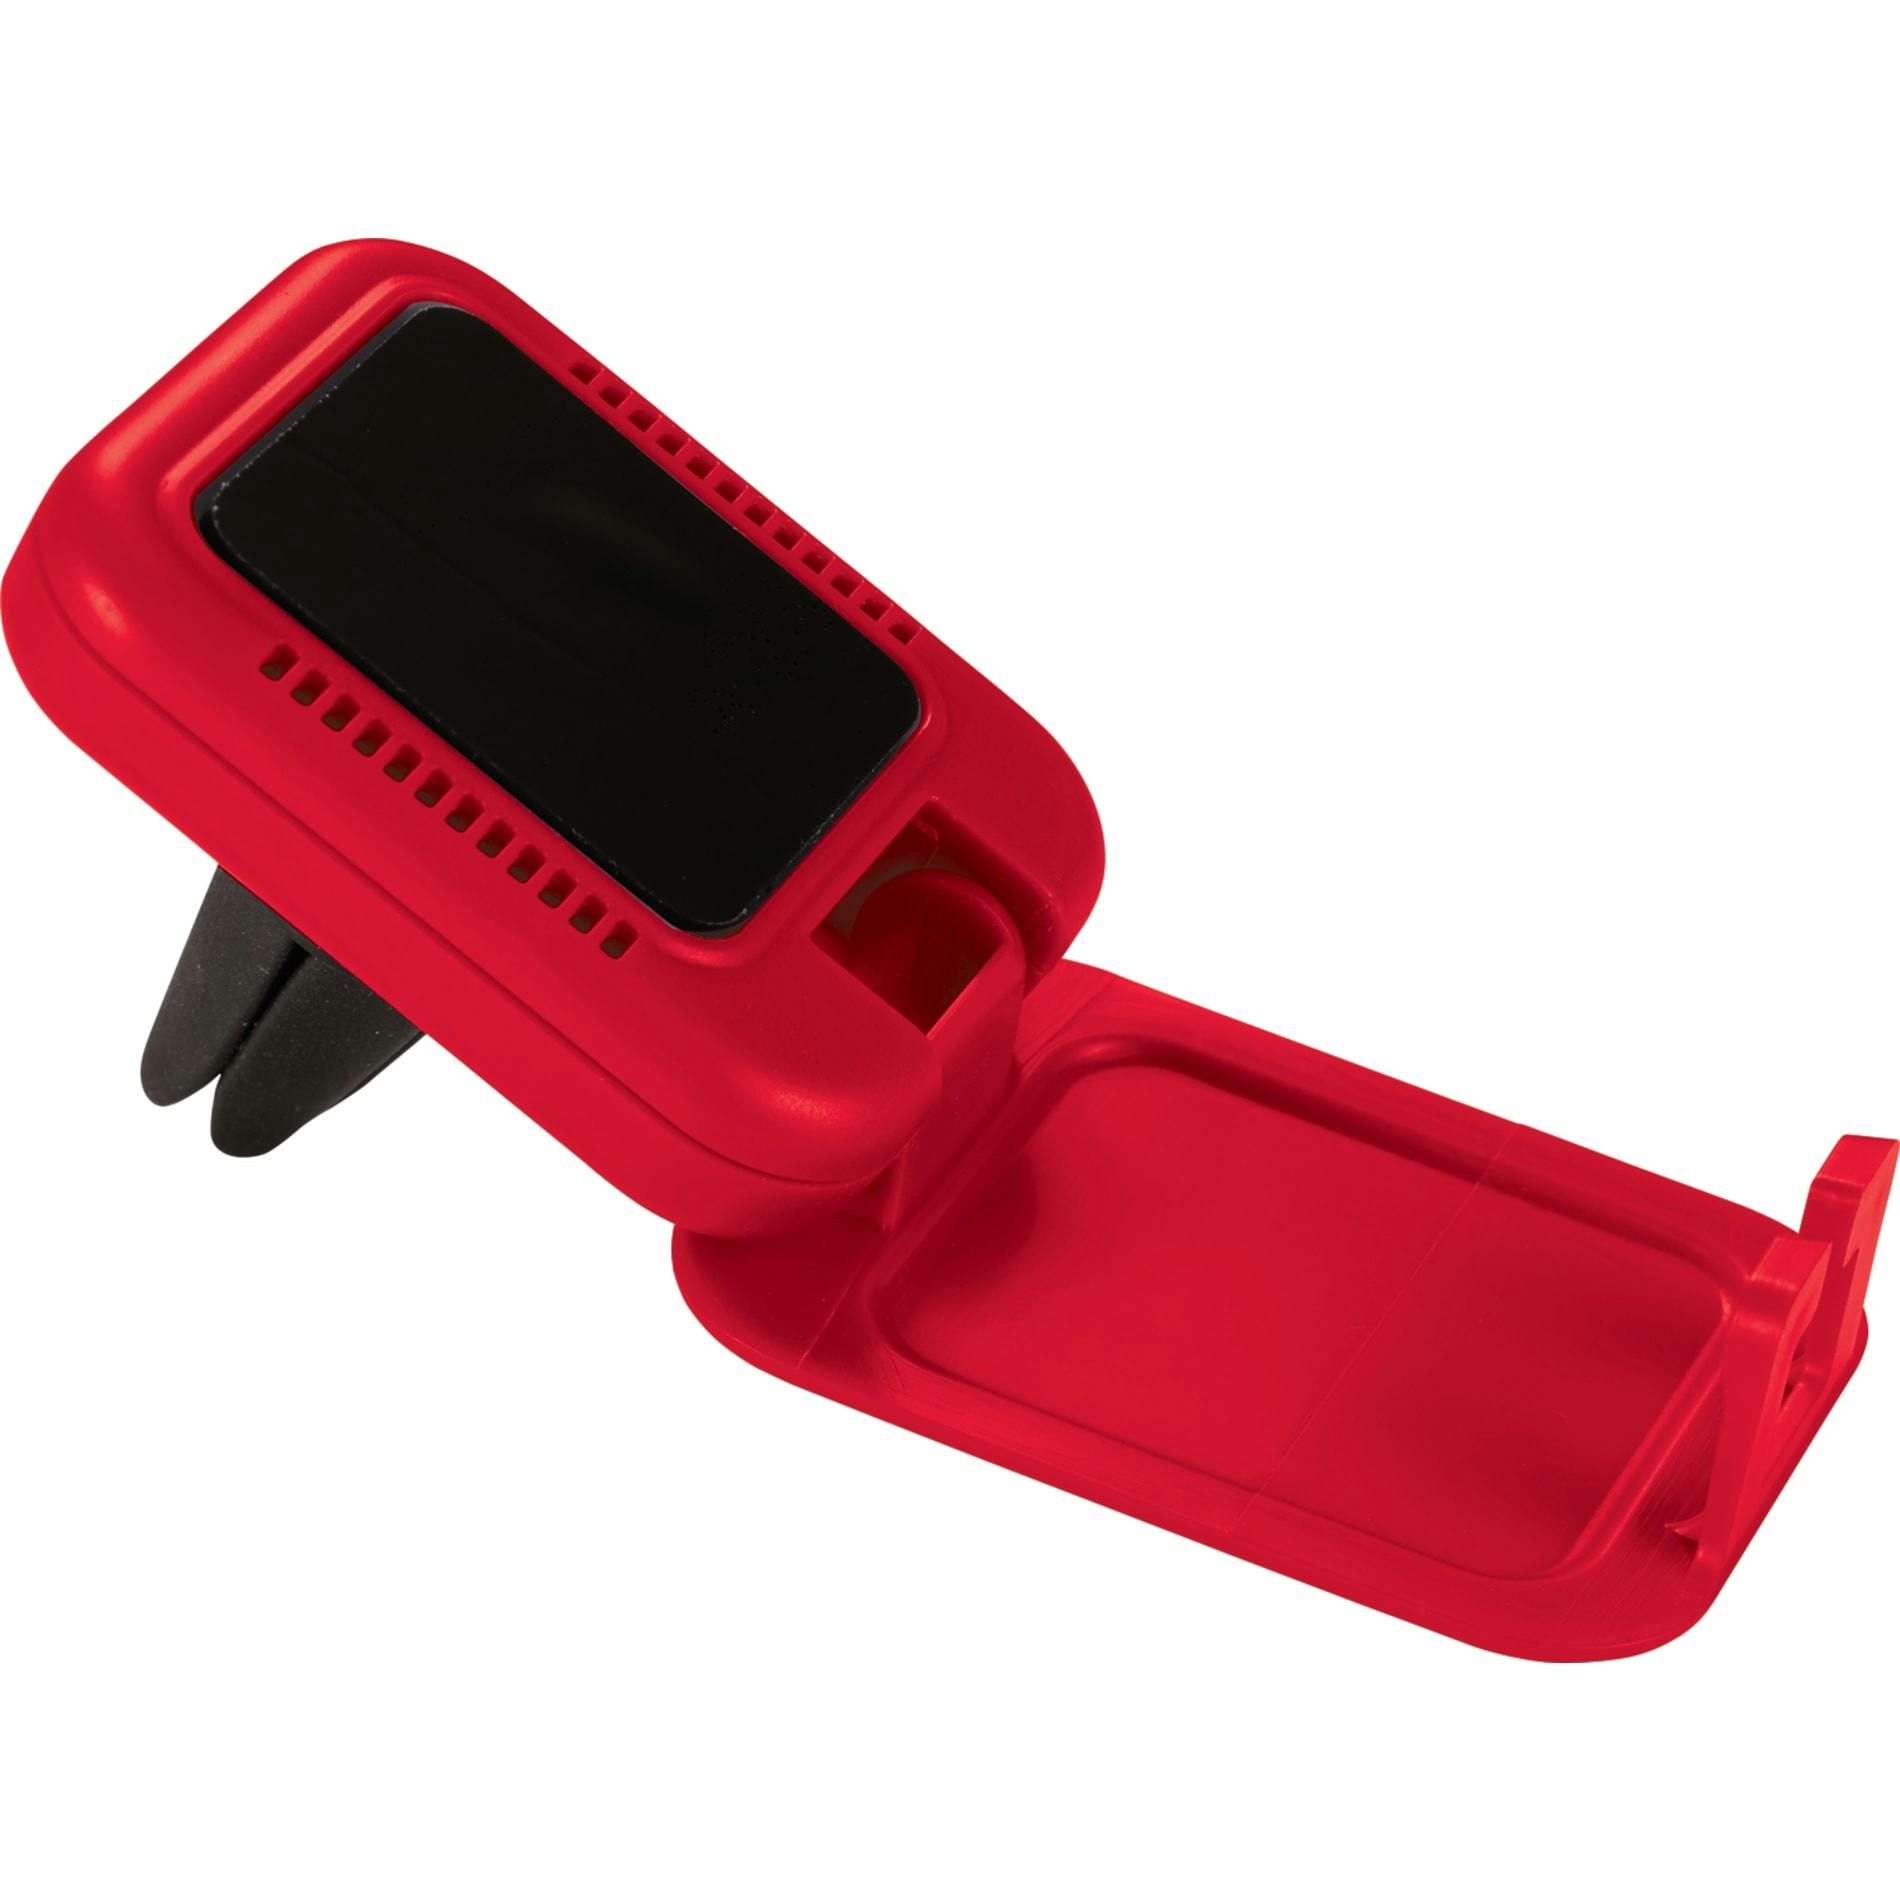 Essence Phone Holder with Air Freshener - additional Image 2